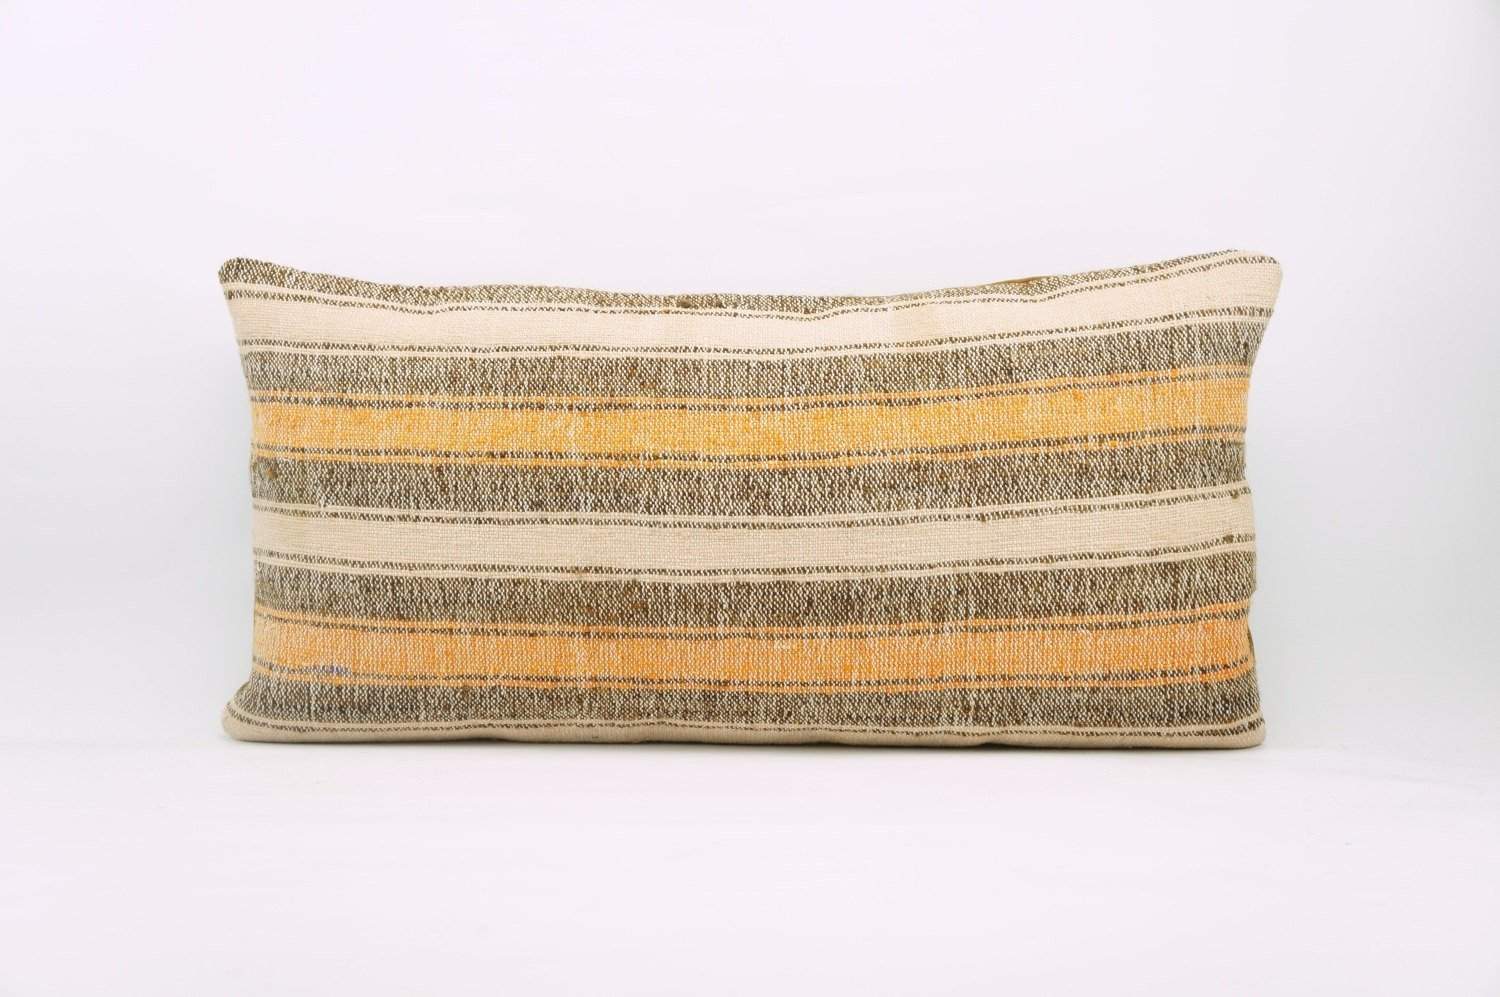 12x24 Vintage Hand Woven Kilim Pillow Lumbar Bohemian pillow case, Modern home decor  orange white brown  striped 965 - kilimpillowstore
 - 1